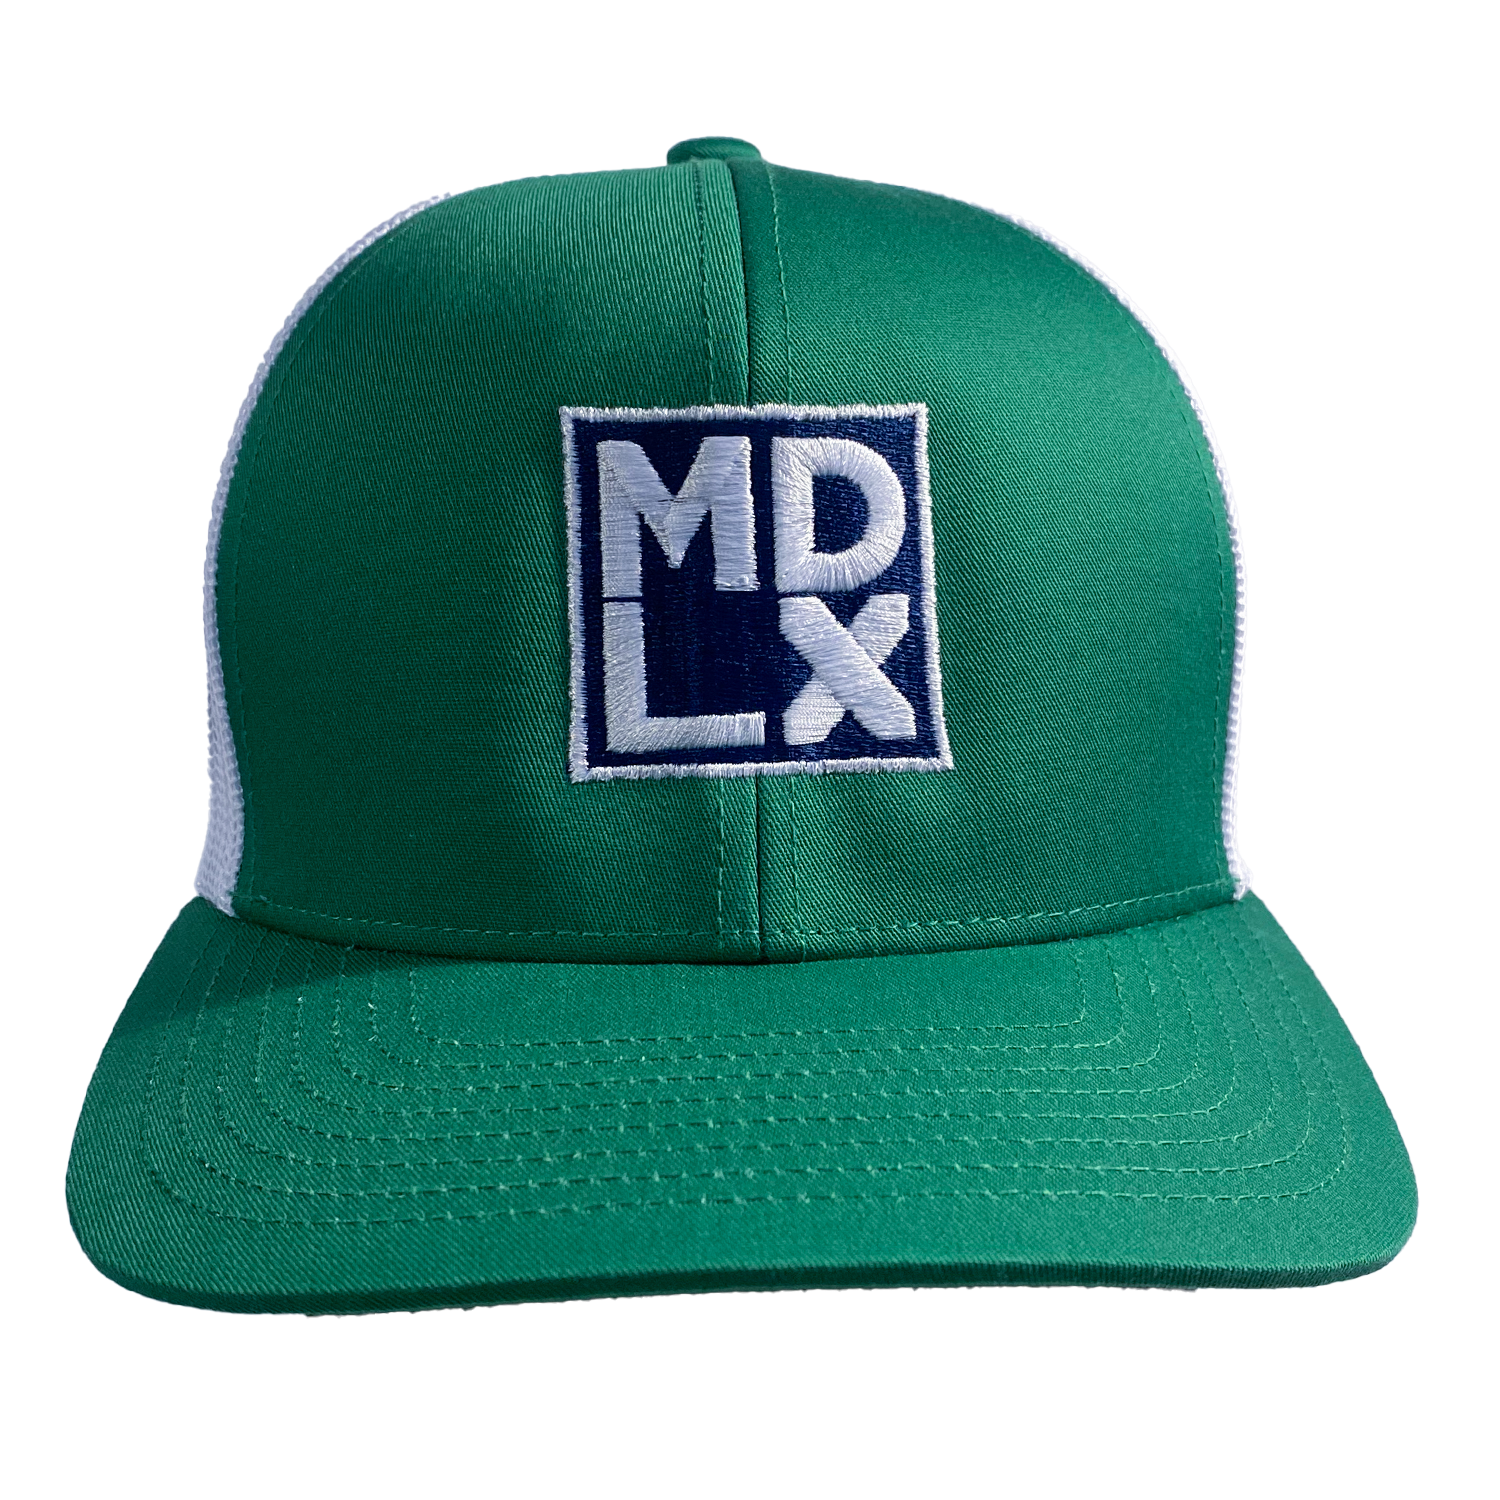 MadGear MDLX Mesh Back Hat